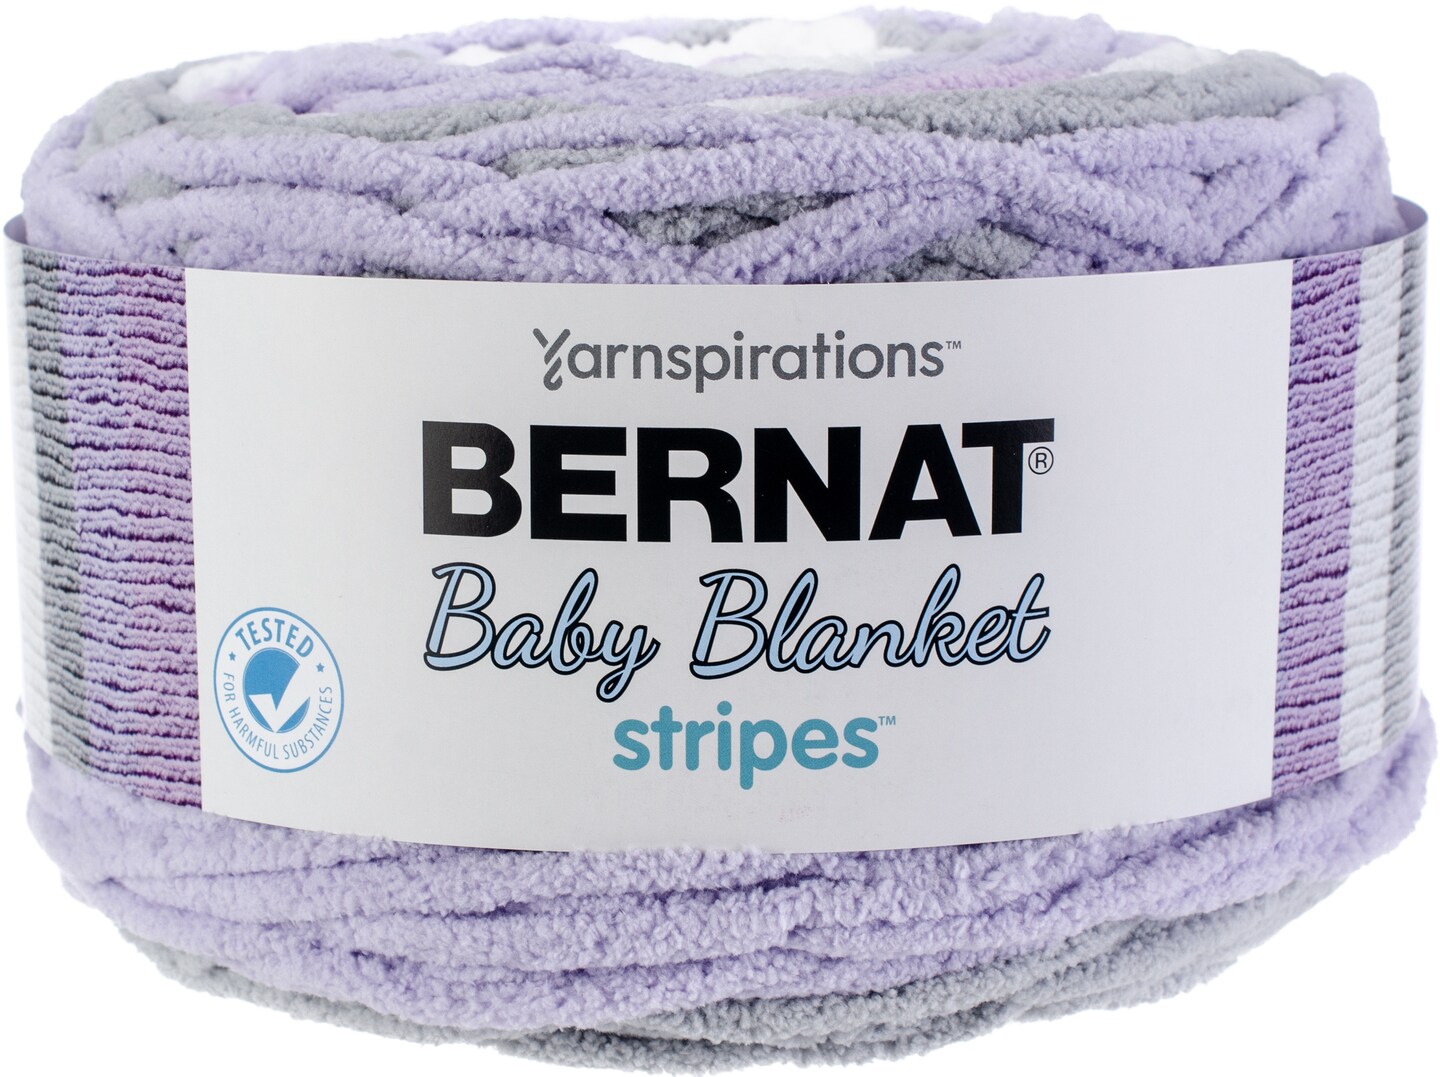 Bernat Baby Blanket Stripes Violets Yarn - 2 Pack of 300g/10.5oz ...